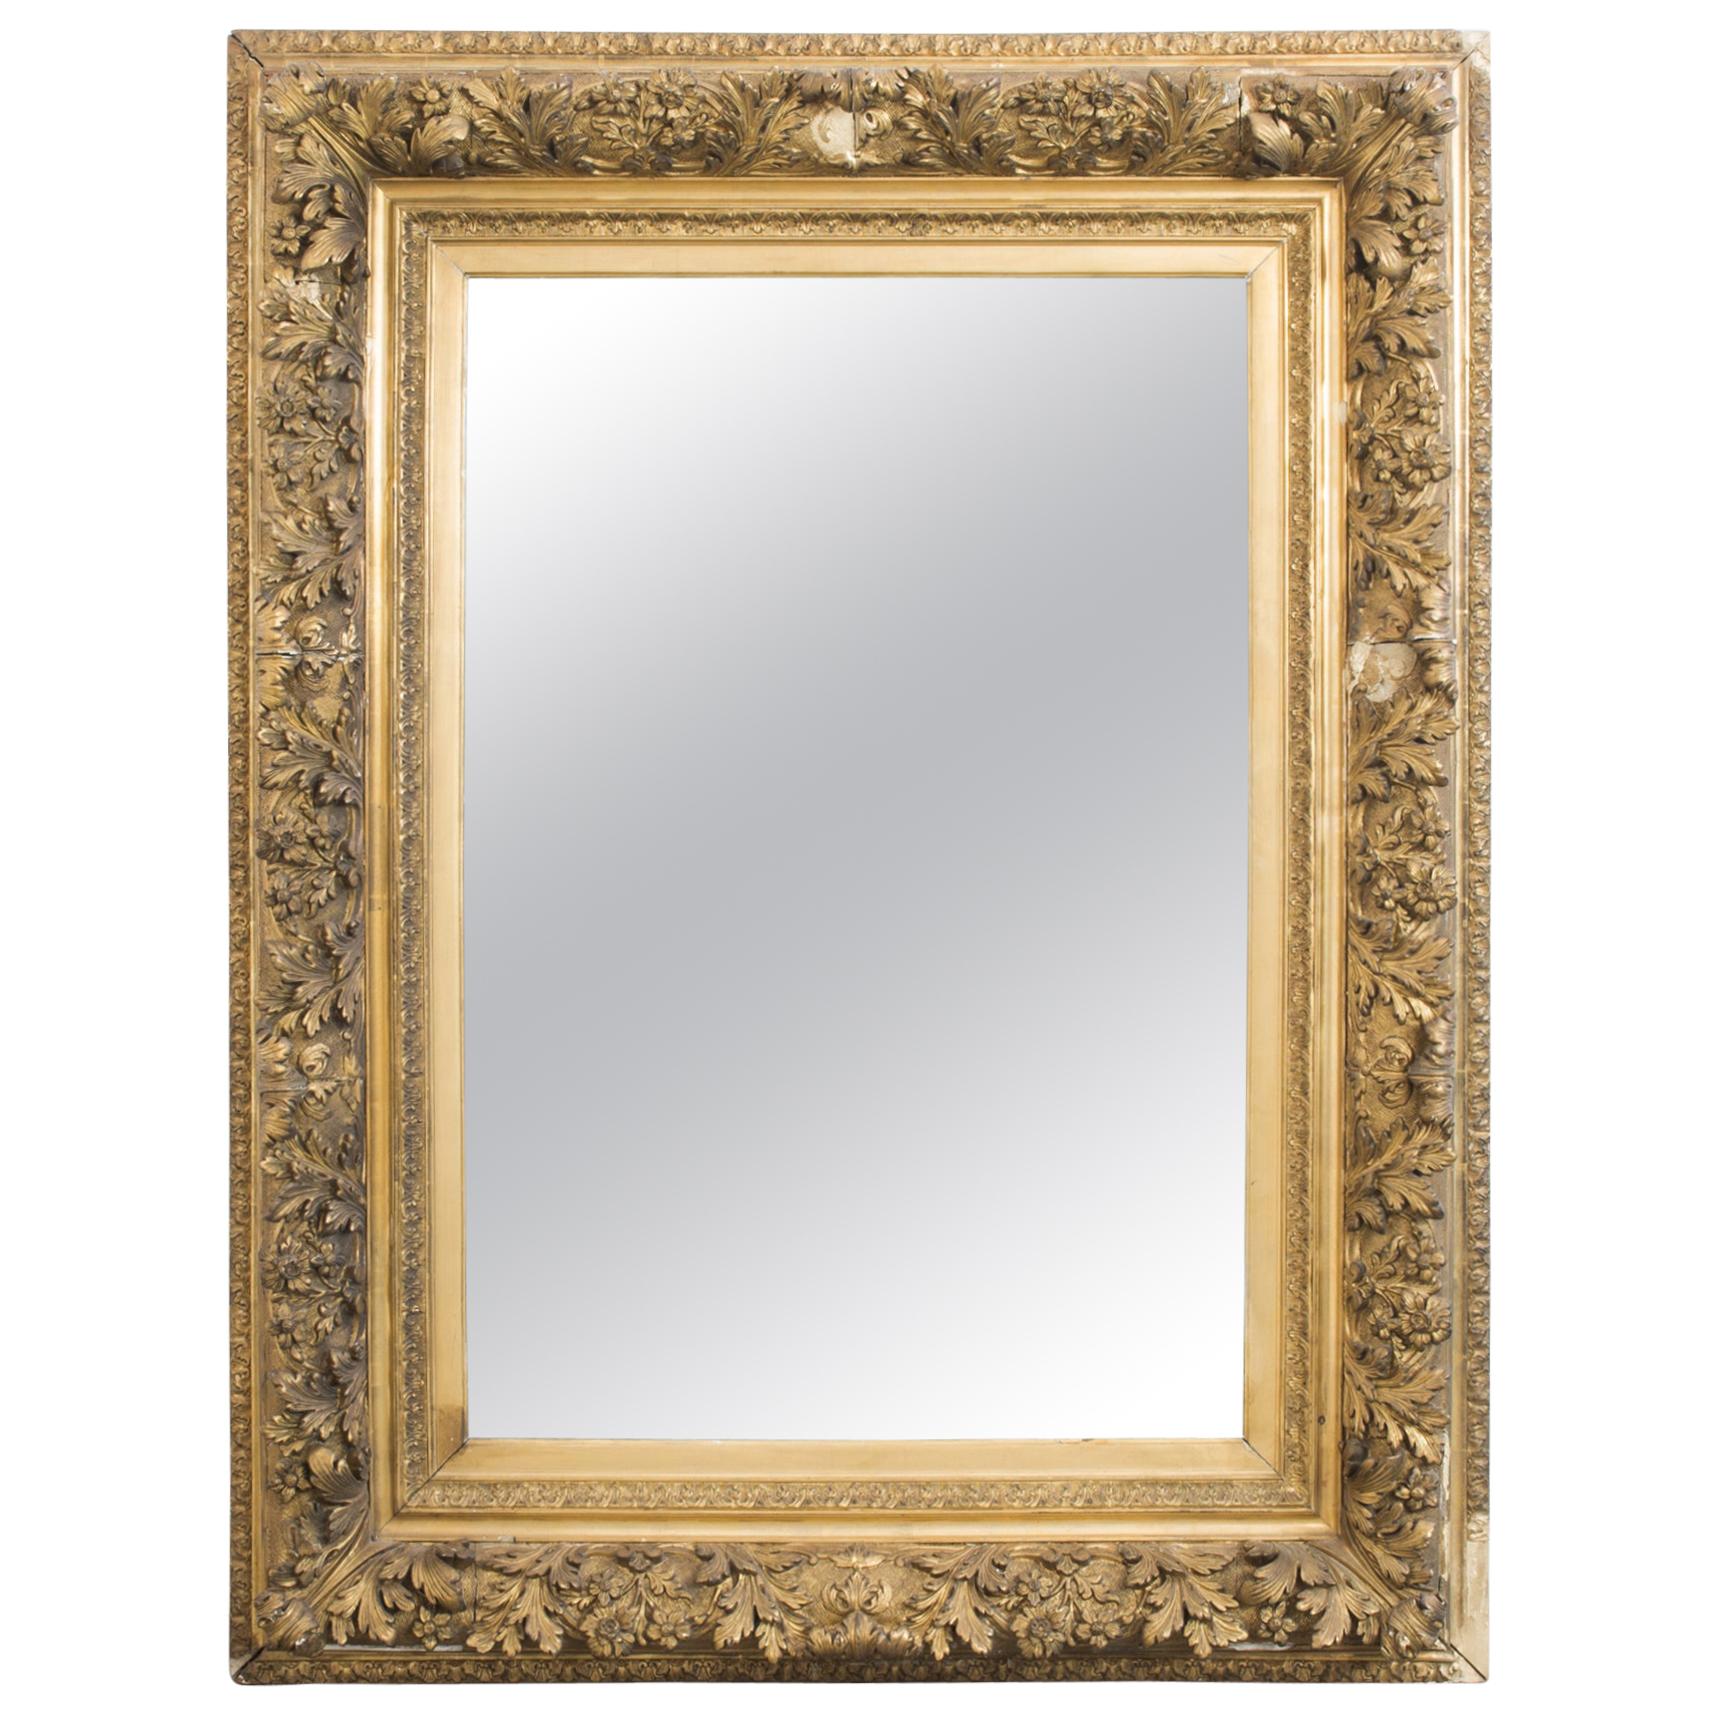 1880s Rococo Gilded Wooden Mirror